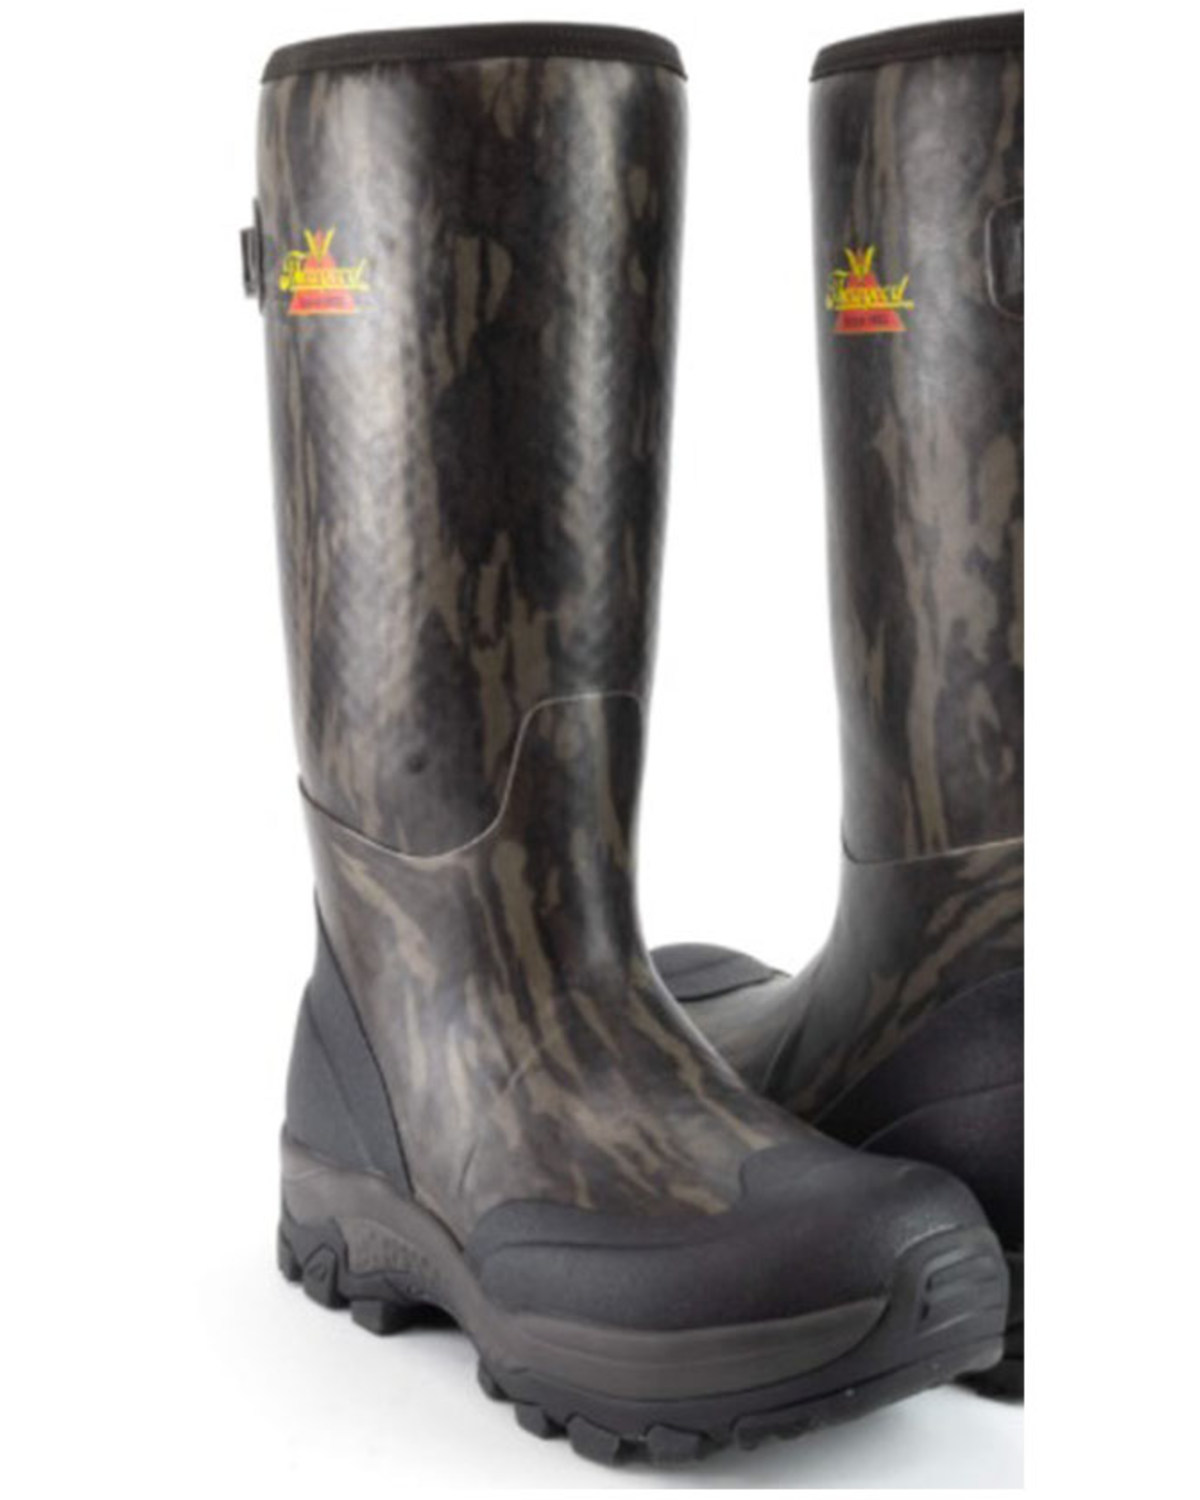 Thorogood Men's Infinity FD Waterproof Rubber Boots - Soft Toe